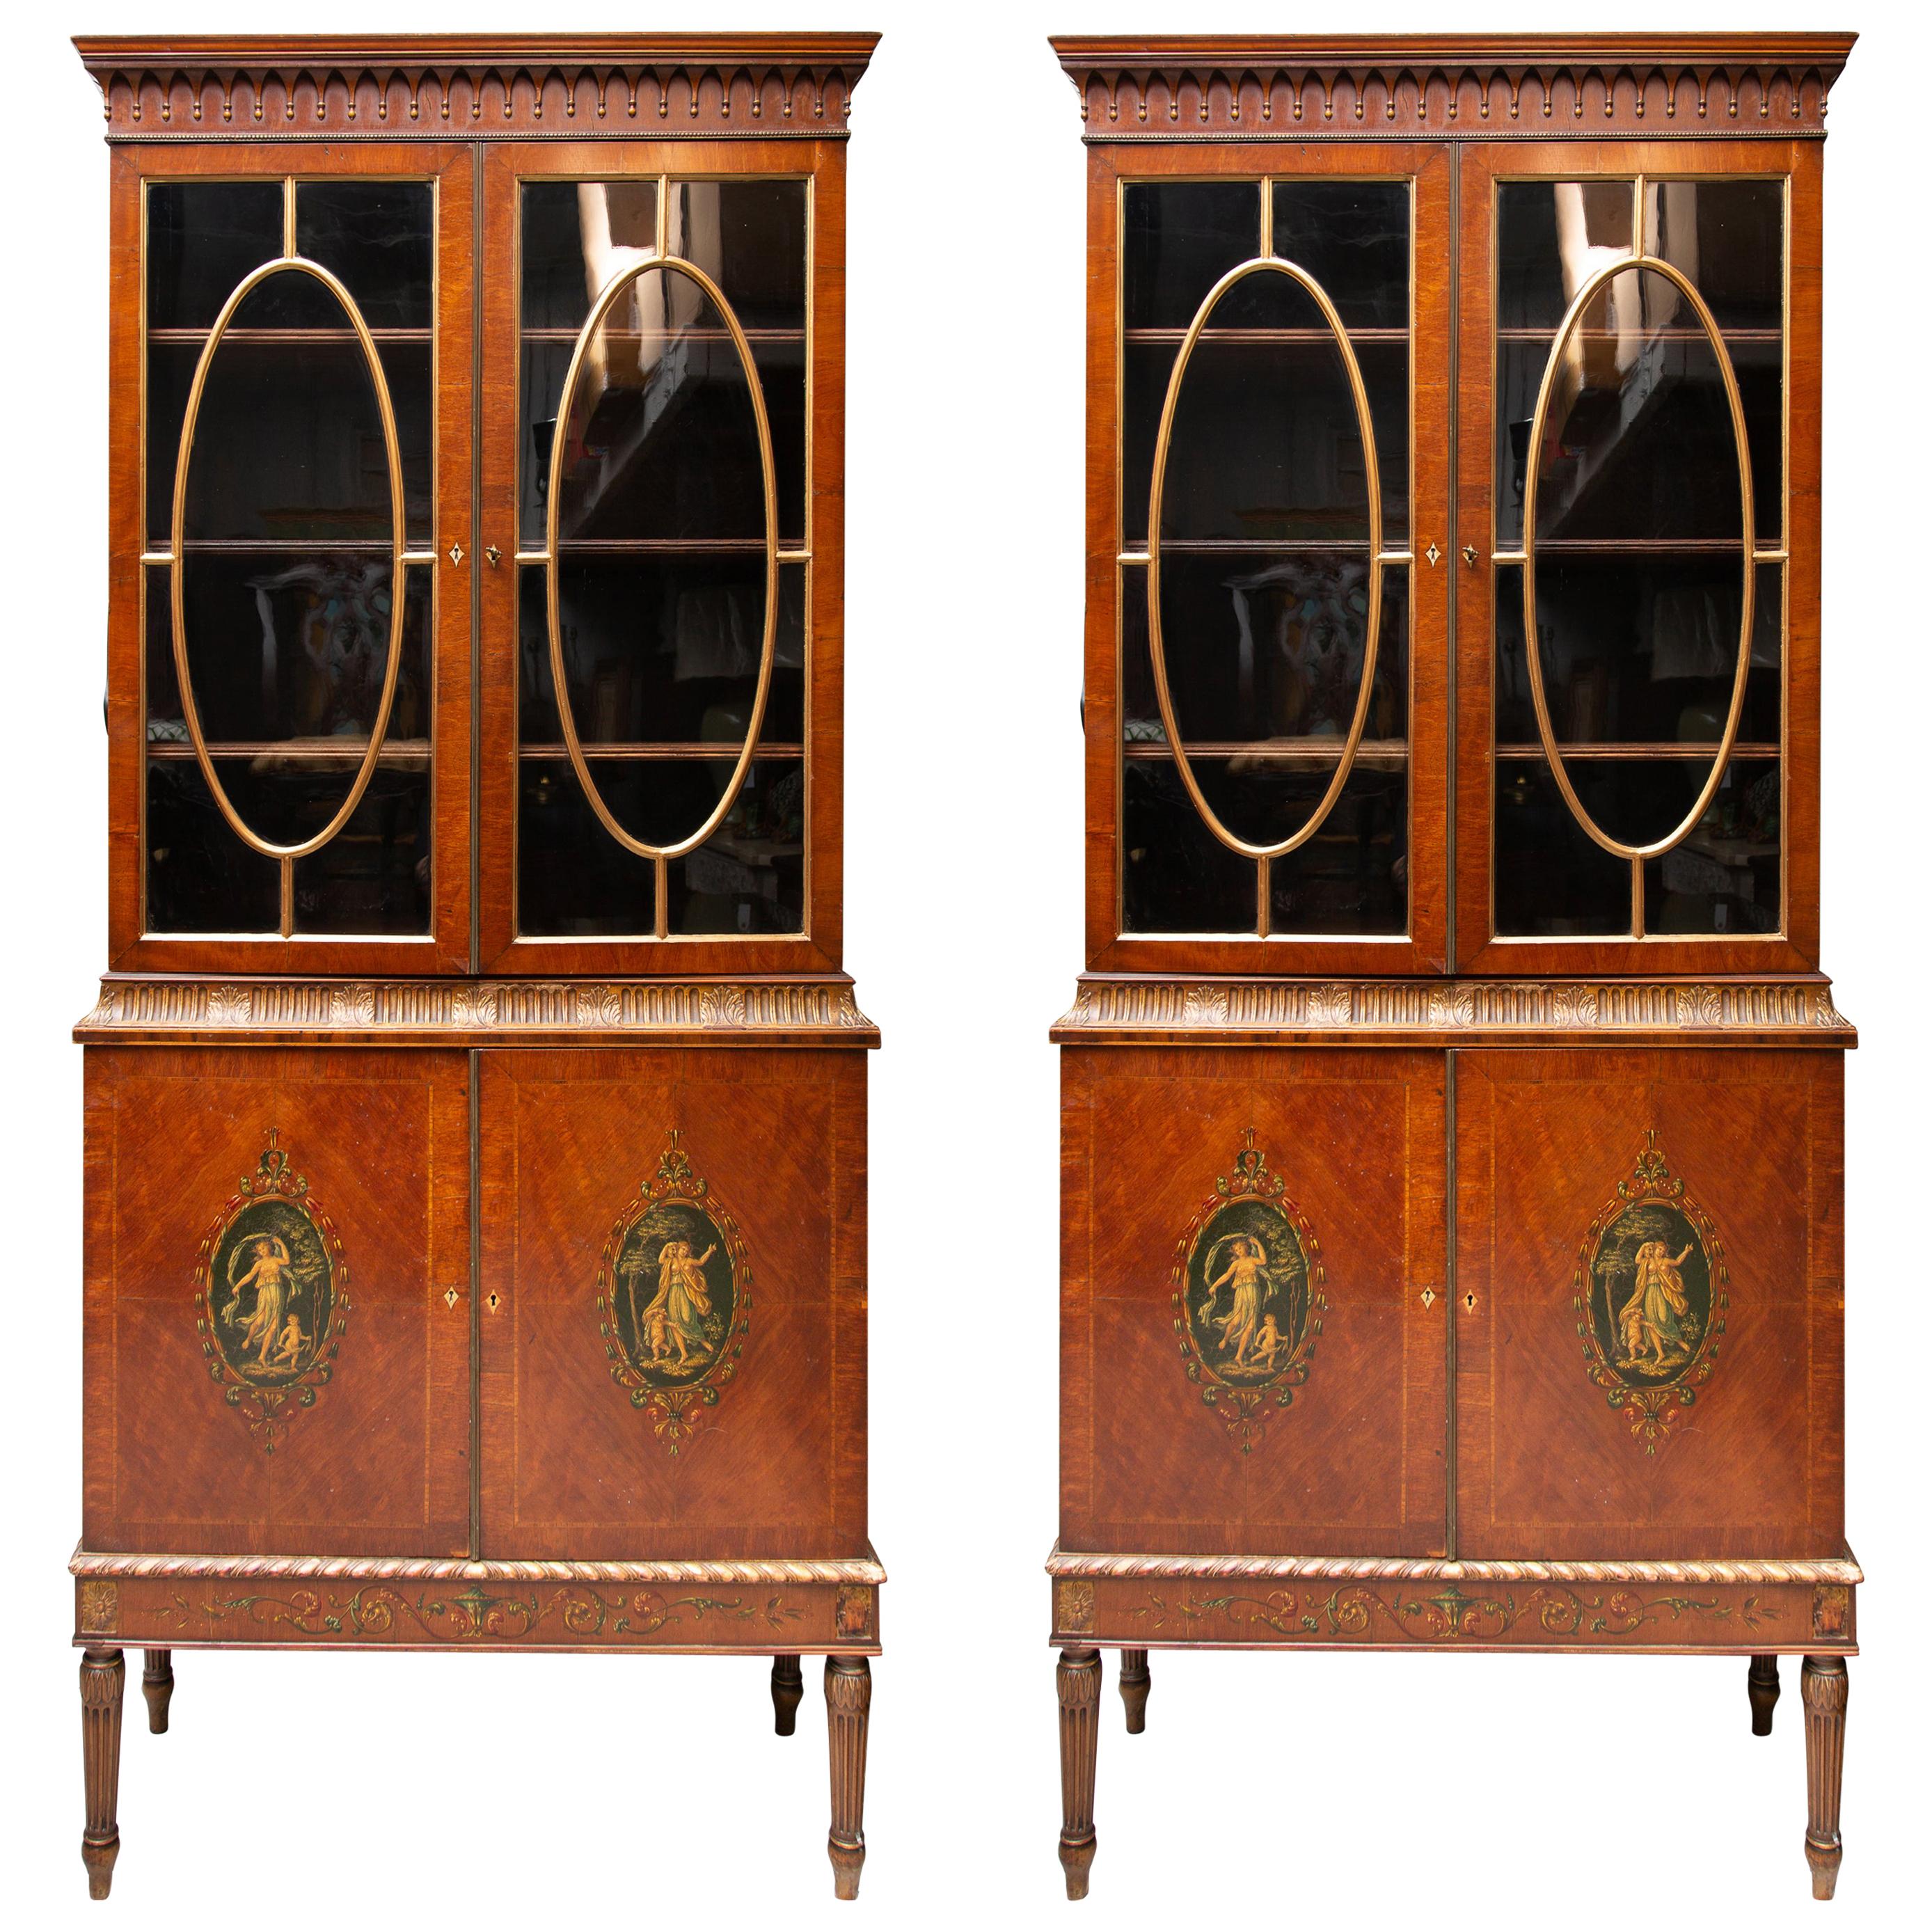  Satinwood Edwardian Adams Style Cabinets